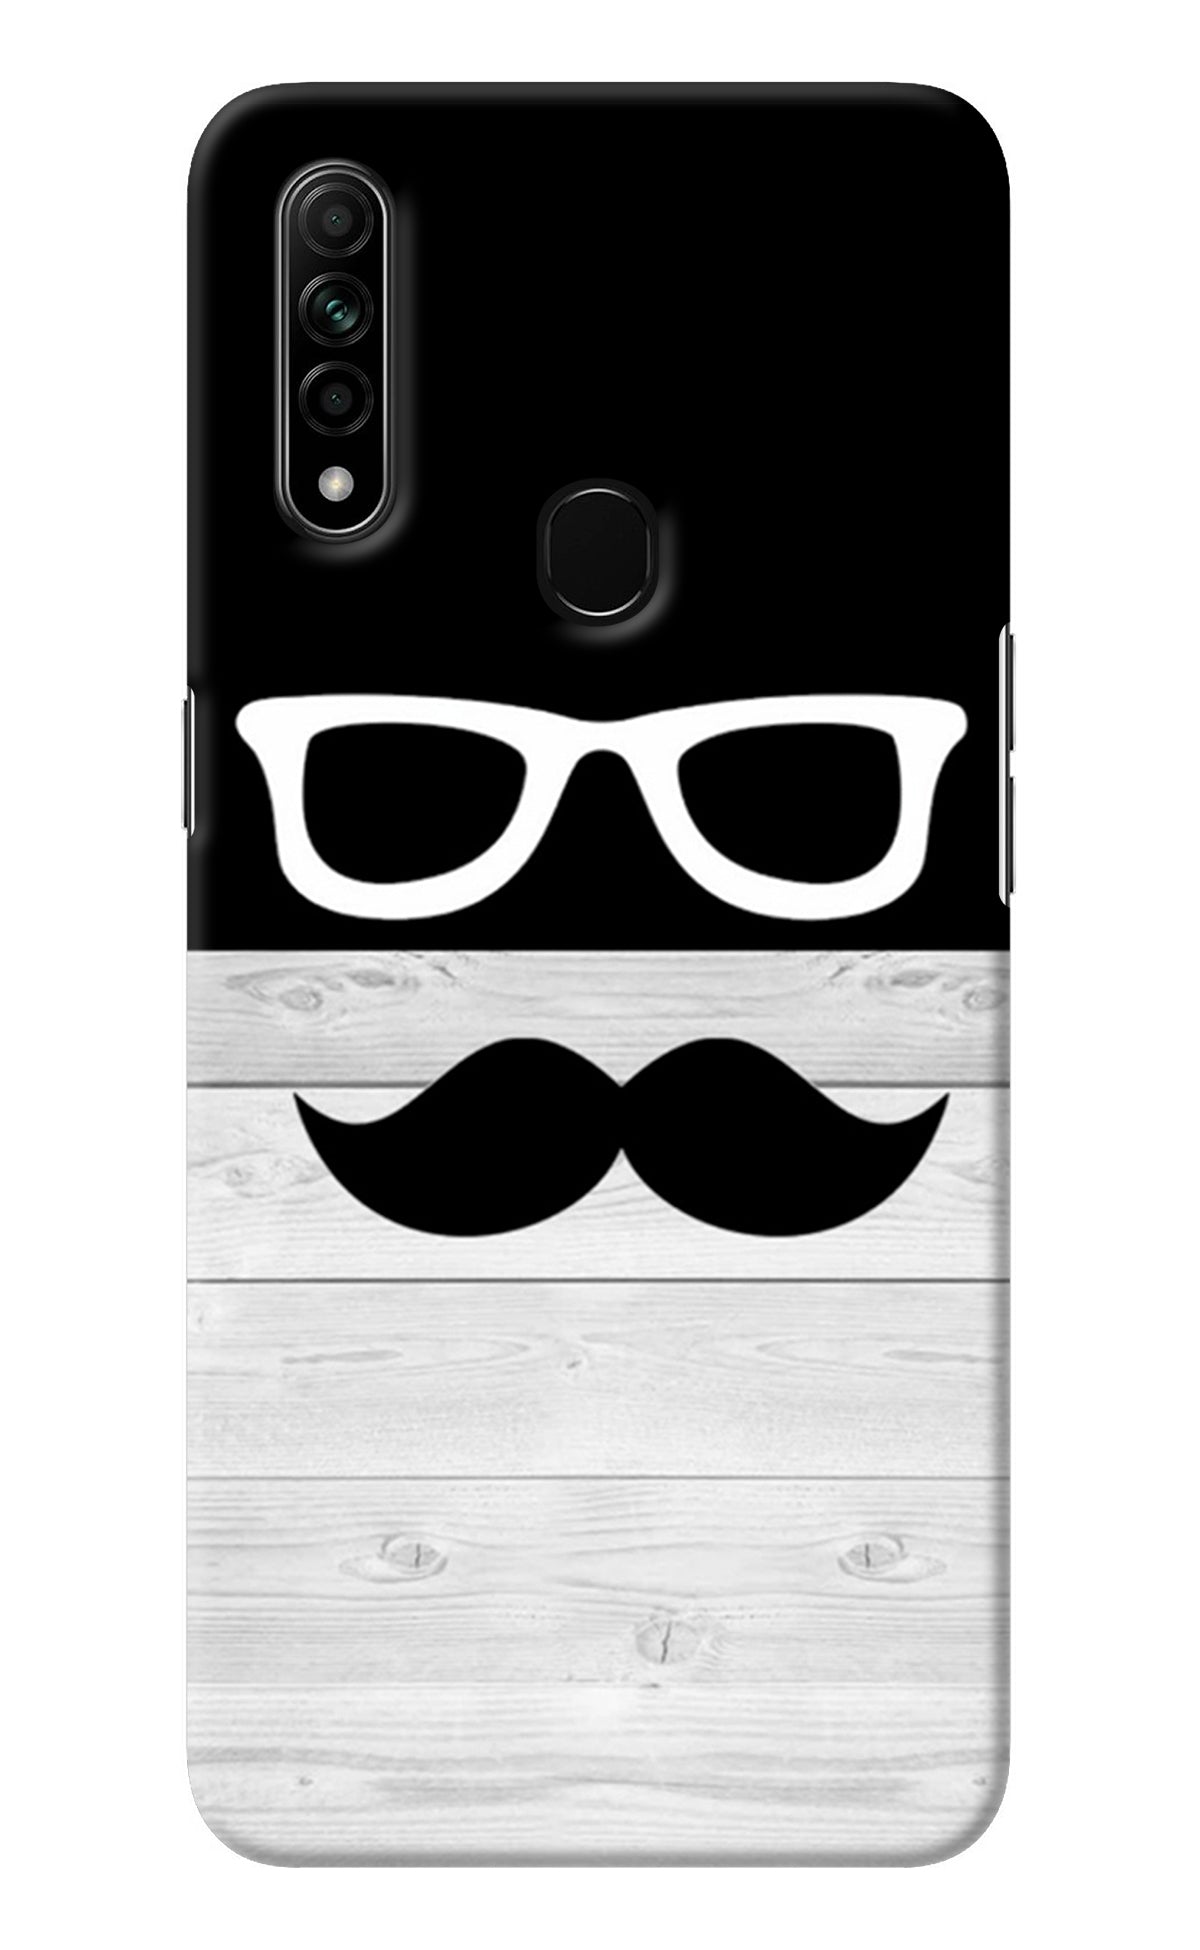 Mustache Oppo A31 Back Cover